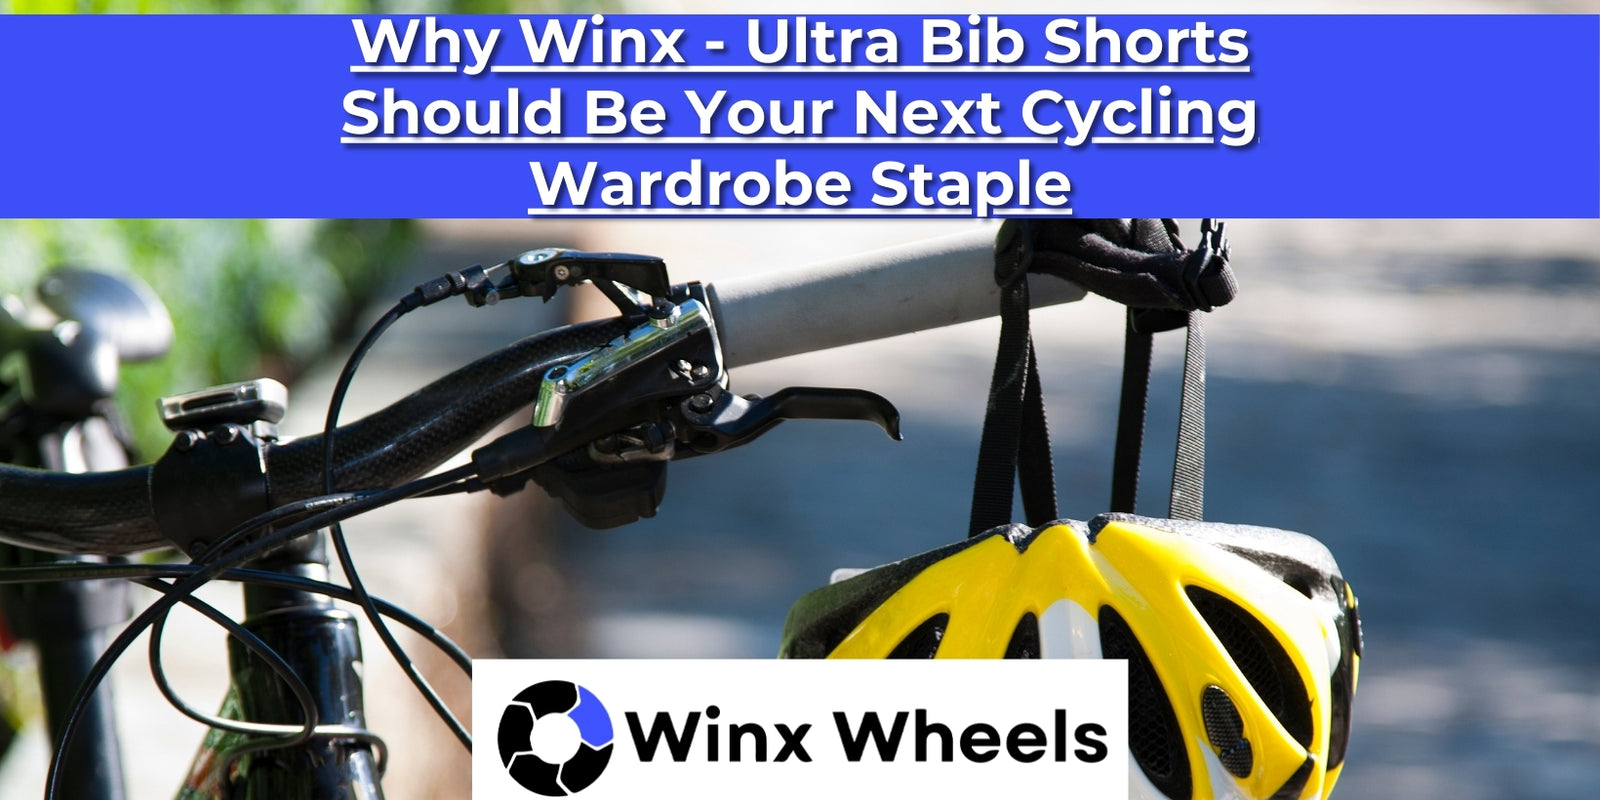 Why Winx - Ultra Bib Shorts Should Be Your Next Cycling Wardrobe Staple